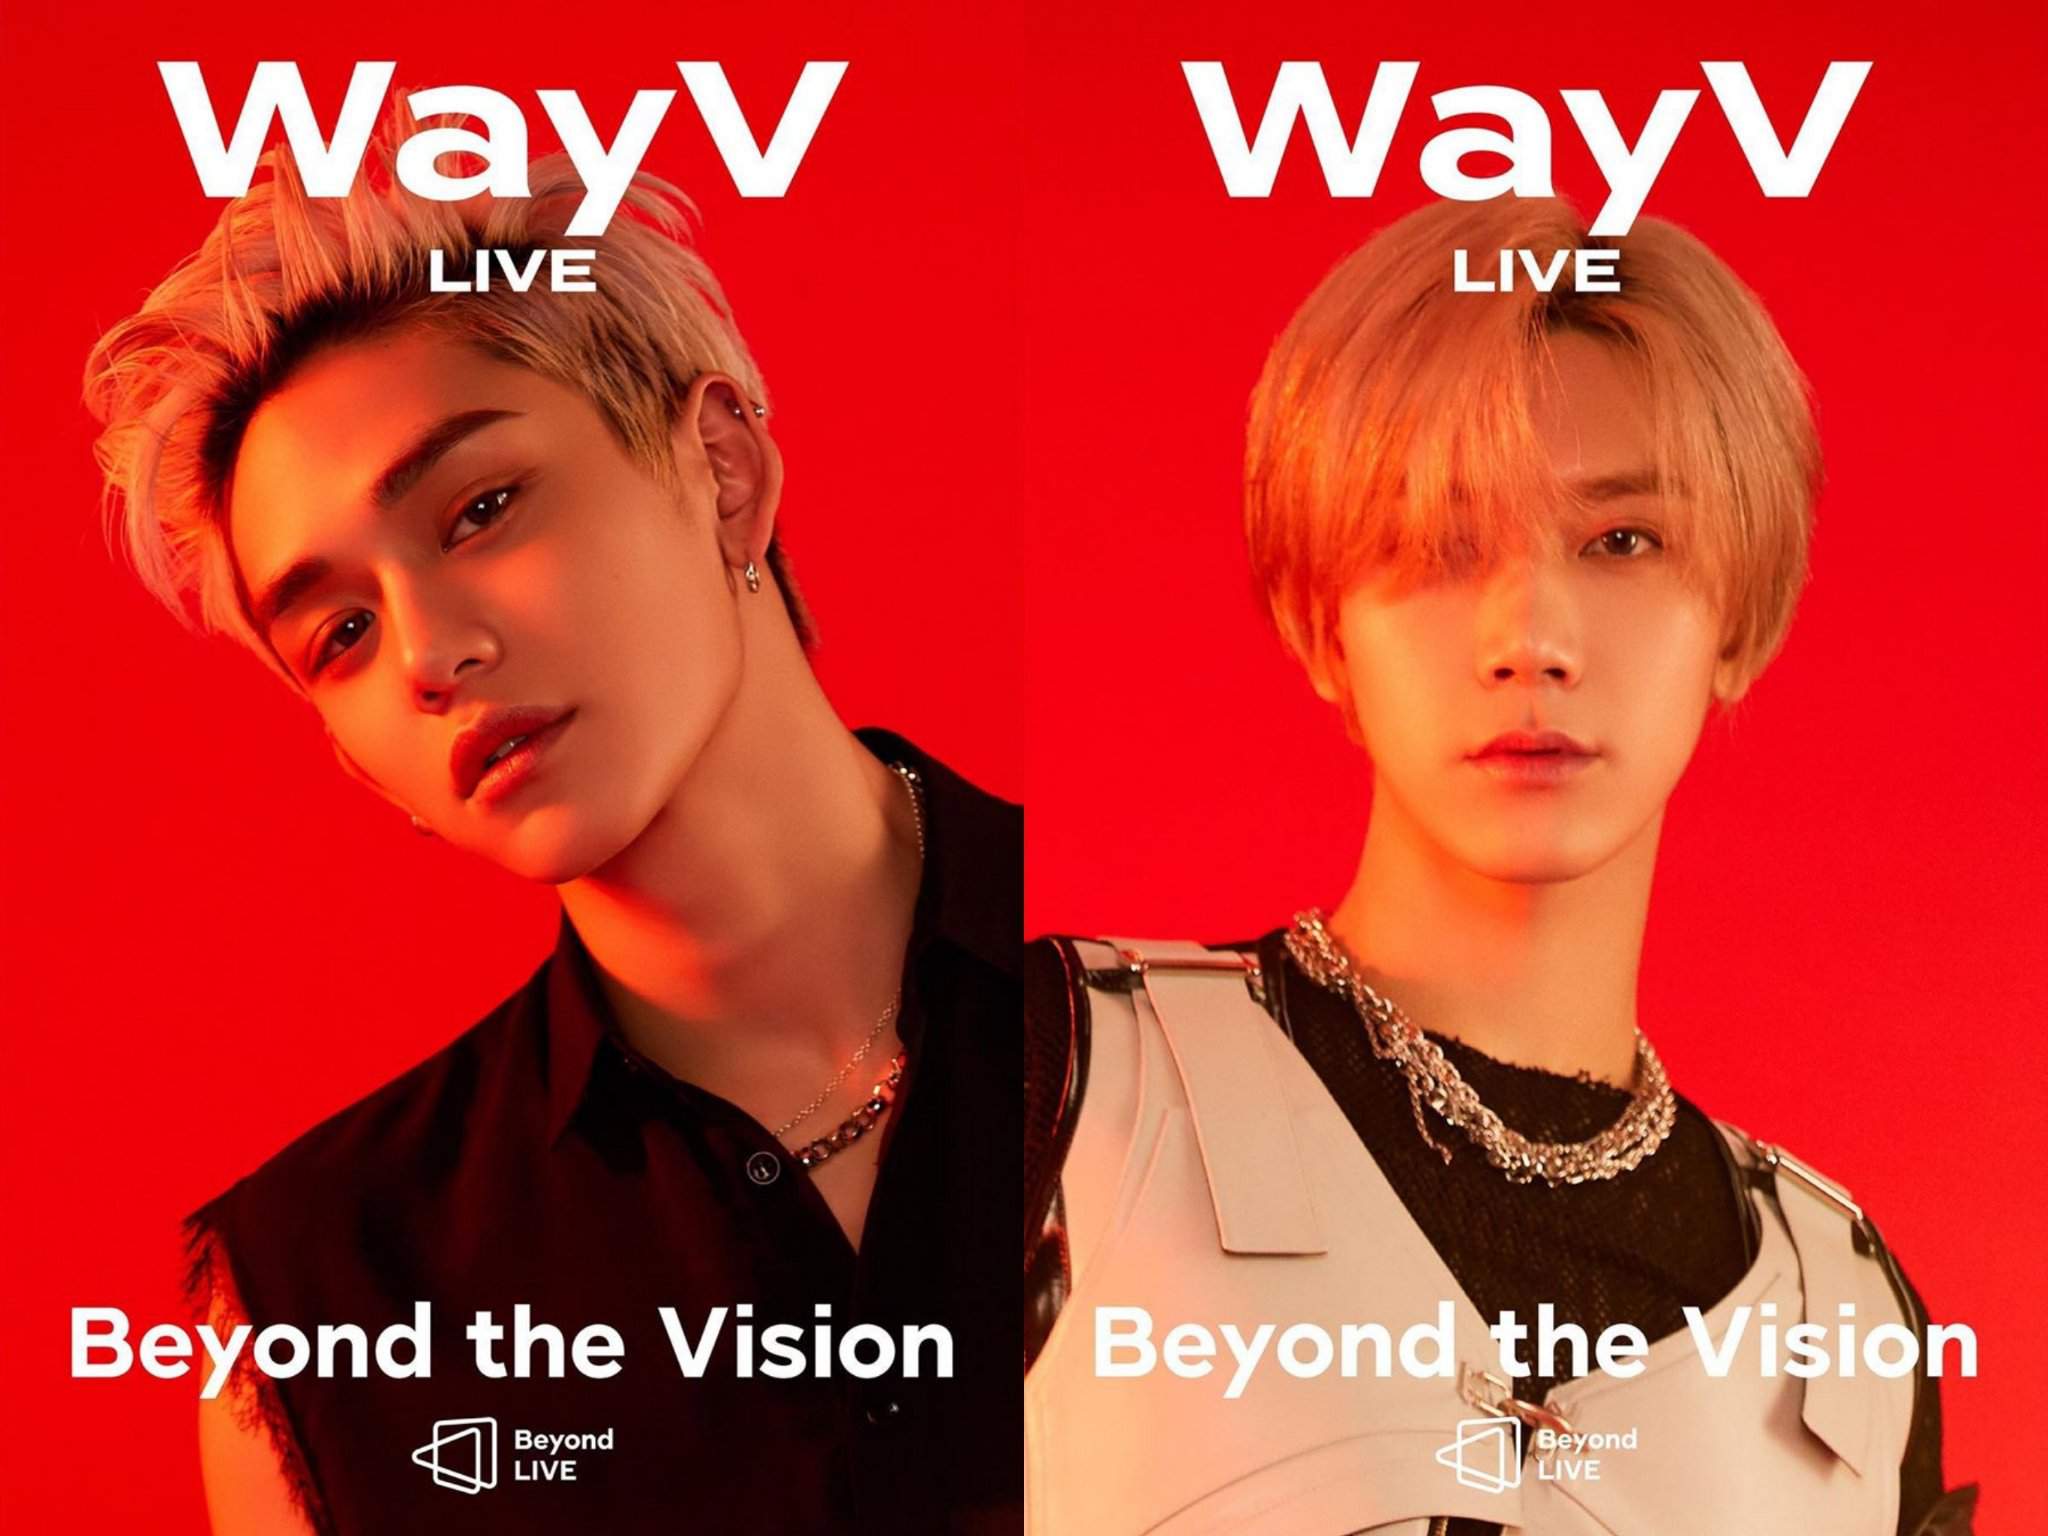 wayv beyond live パンフレット トレカ ウィンウィン - K-POP/アジア